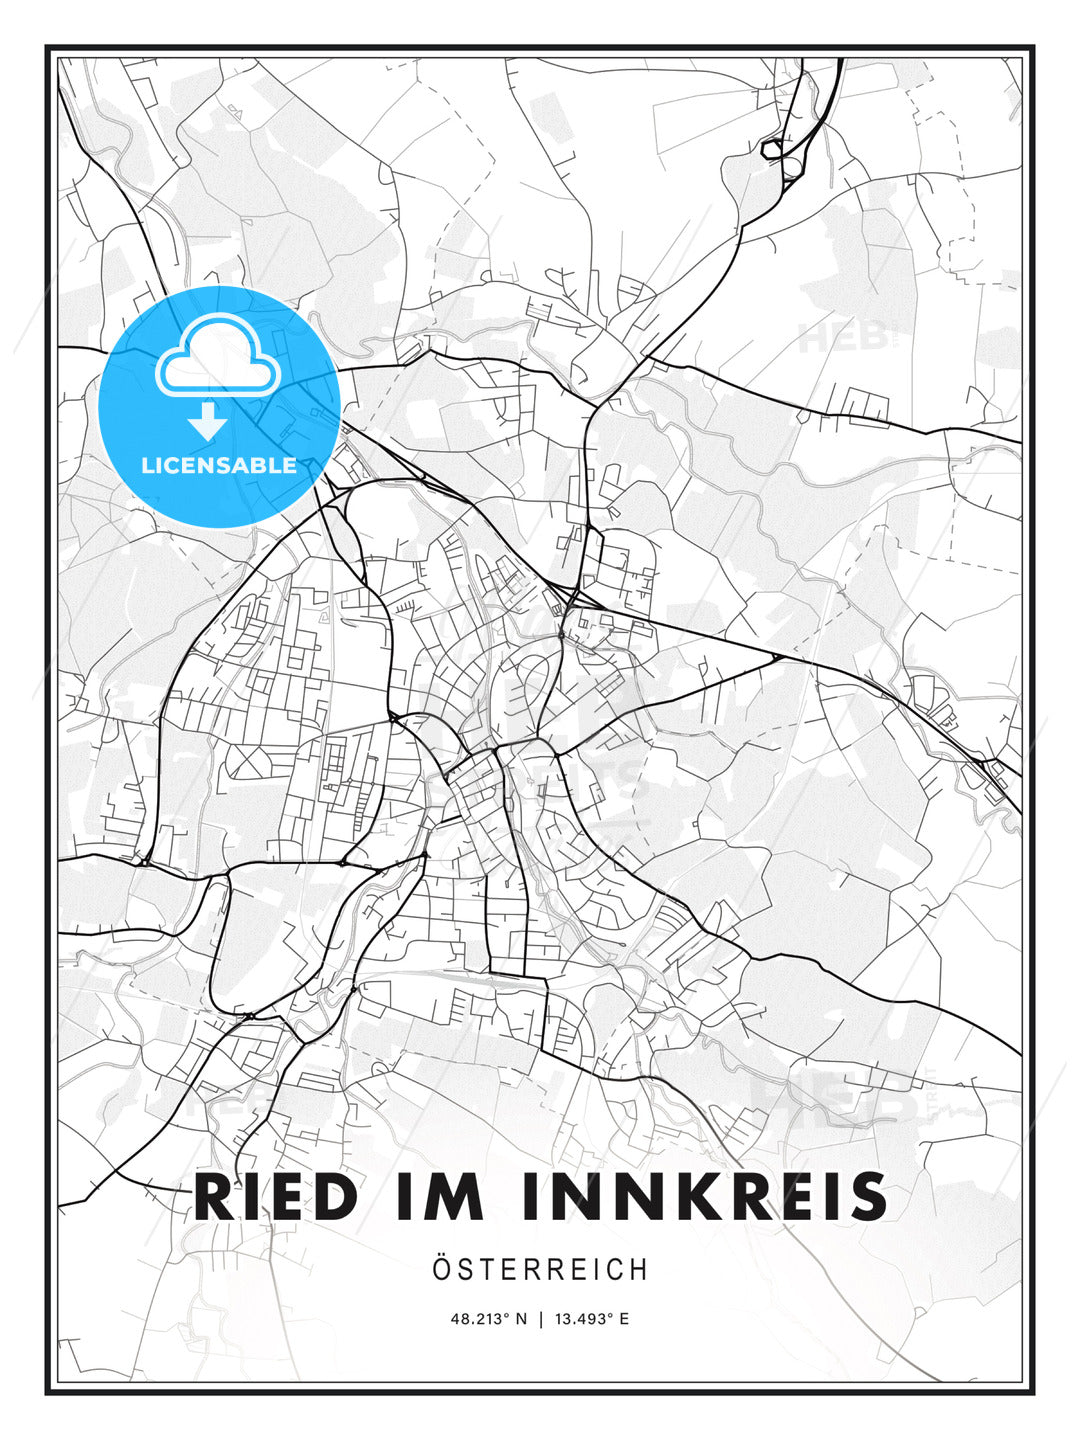 Ried im Innkreis, Austria, Modern Print Template in Various Formats - HEBSTREITS Sketches